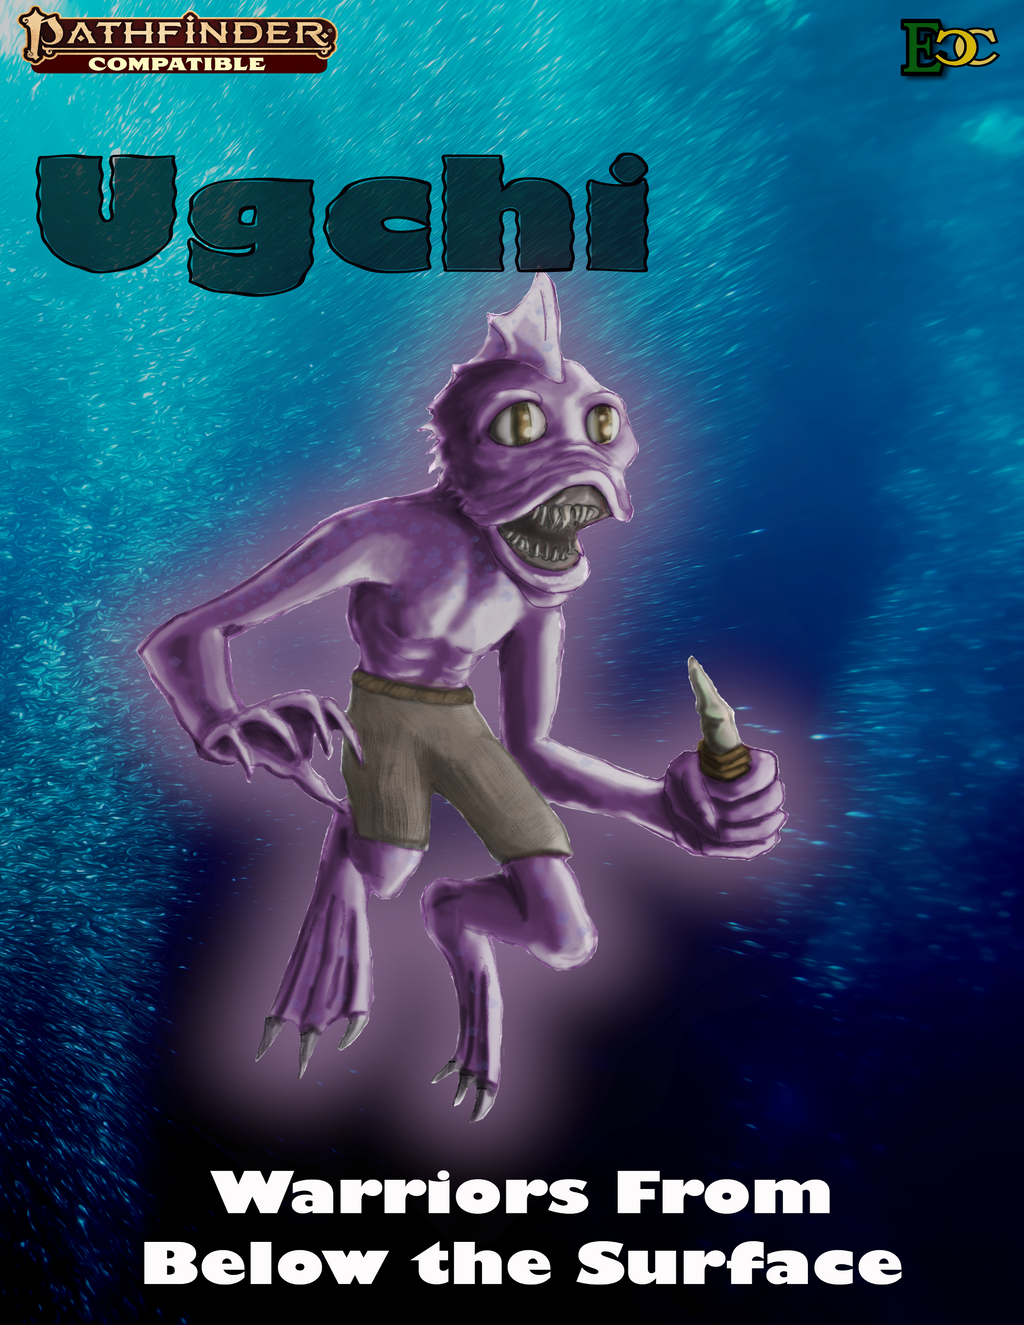 Ugchi Ancestry